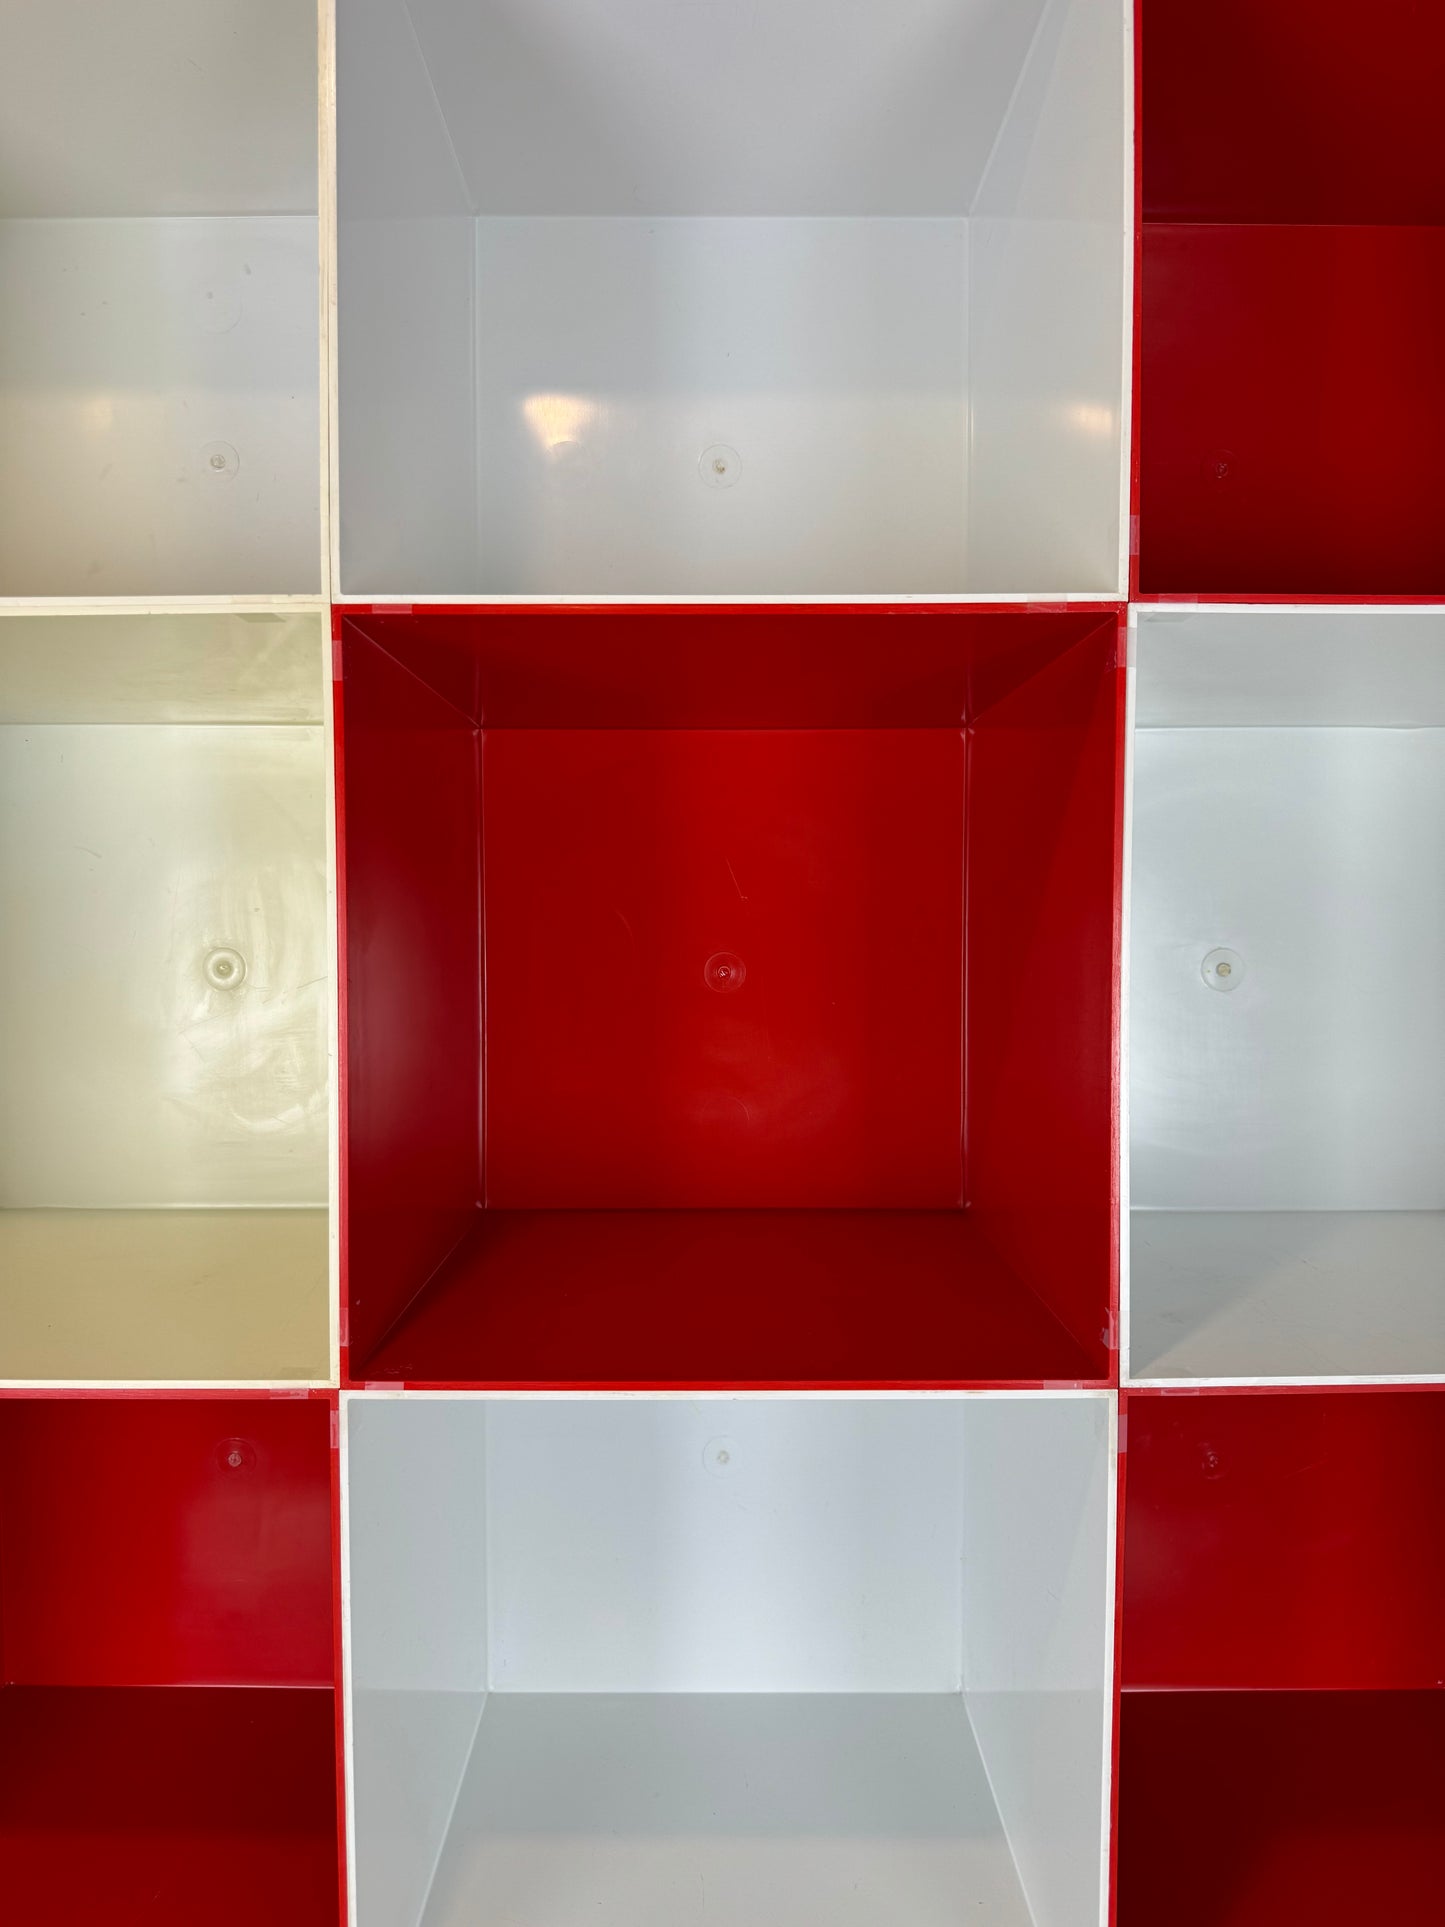 Vintage Red & White Molded Plastic Cube Shelving